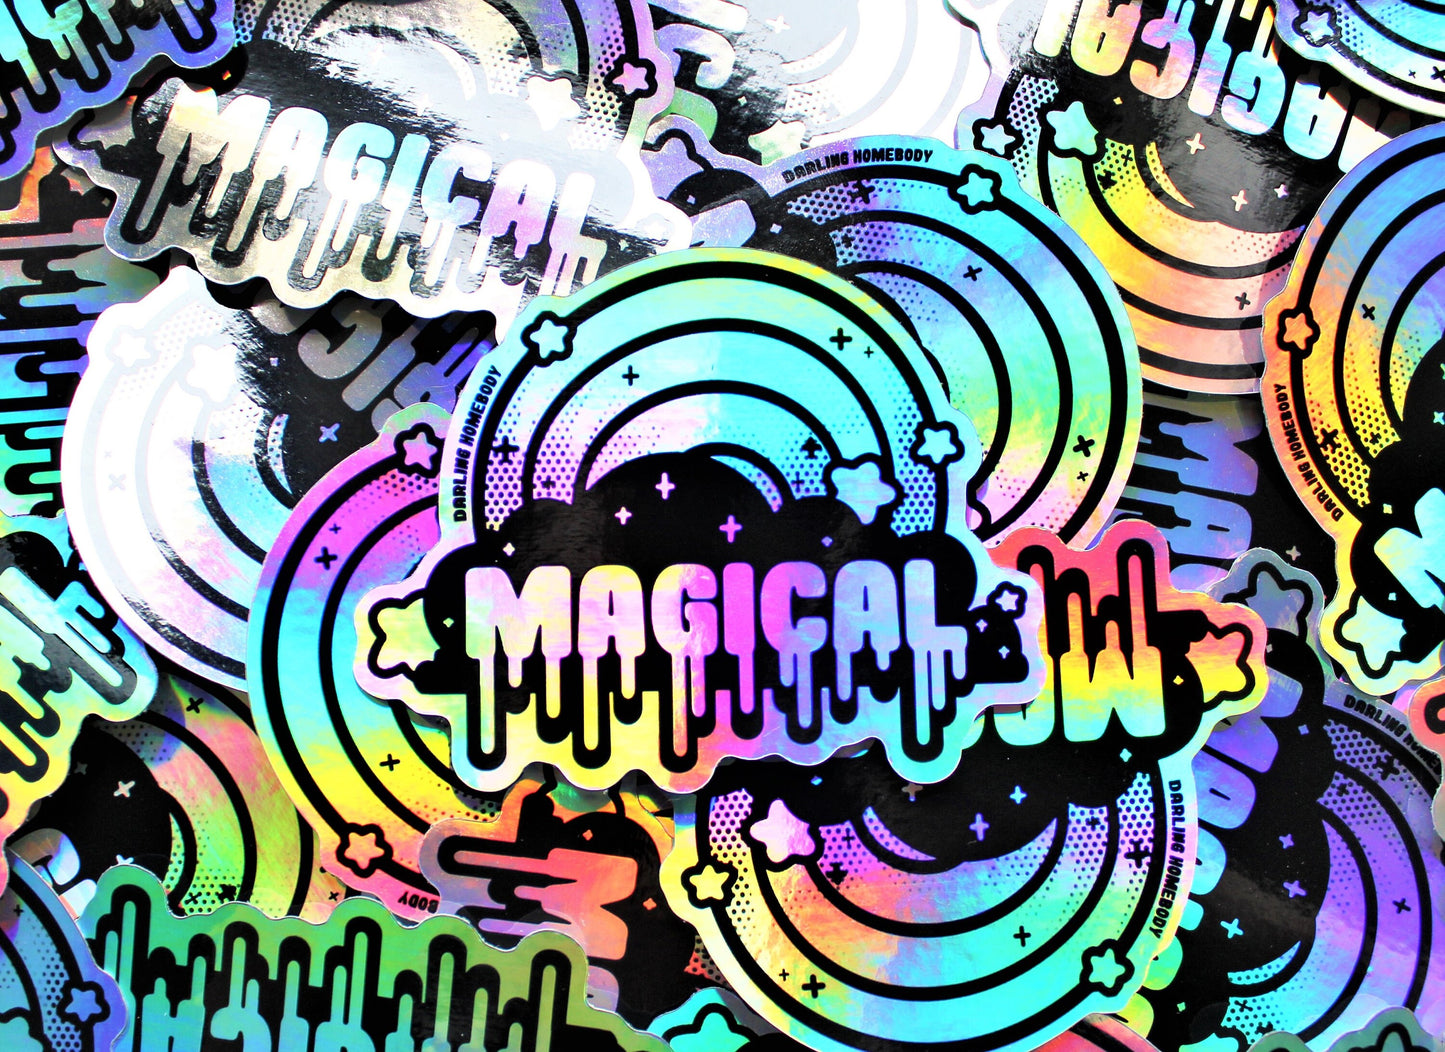 Holographic Sticker. Weatherproof Vinyl Decal. Magical Rainbow Iridescent Sticker. Sailor Moon Steven Universe Gift Nonbinary